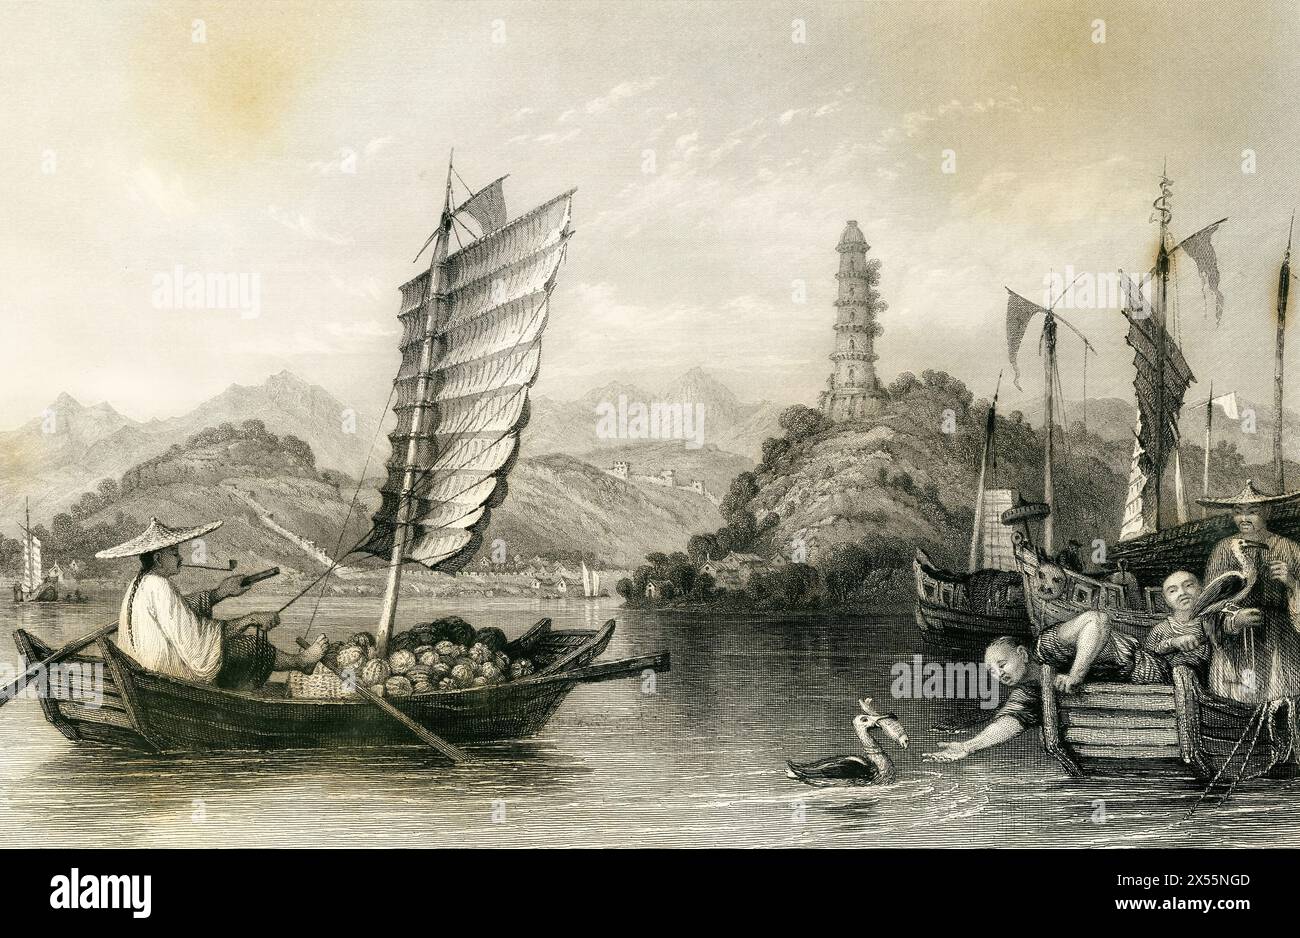 Chinesischer Bootsmann Economizing Time & Labour, Poo-kow / Nanjing Jiangsu China / gezeichnet von T. Allom Gravur von A.. Willmore Stockfoto